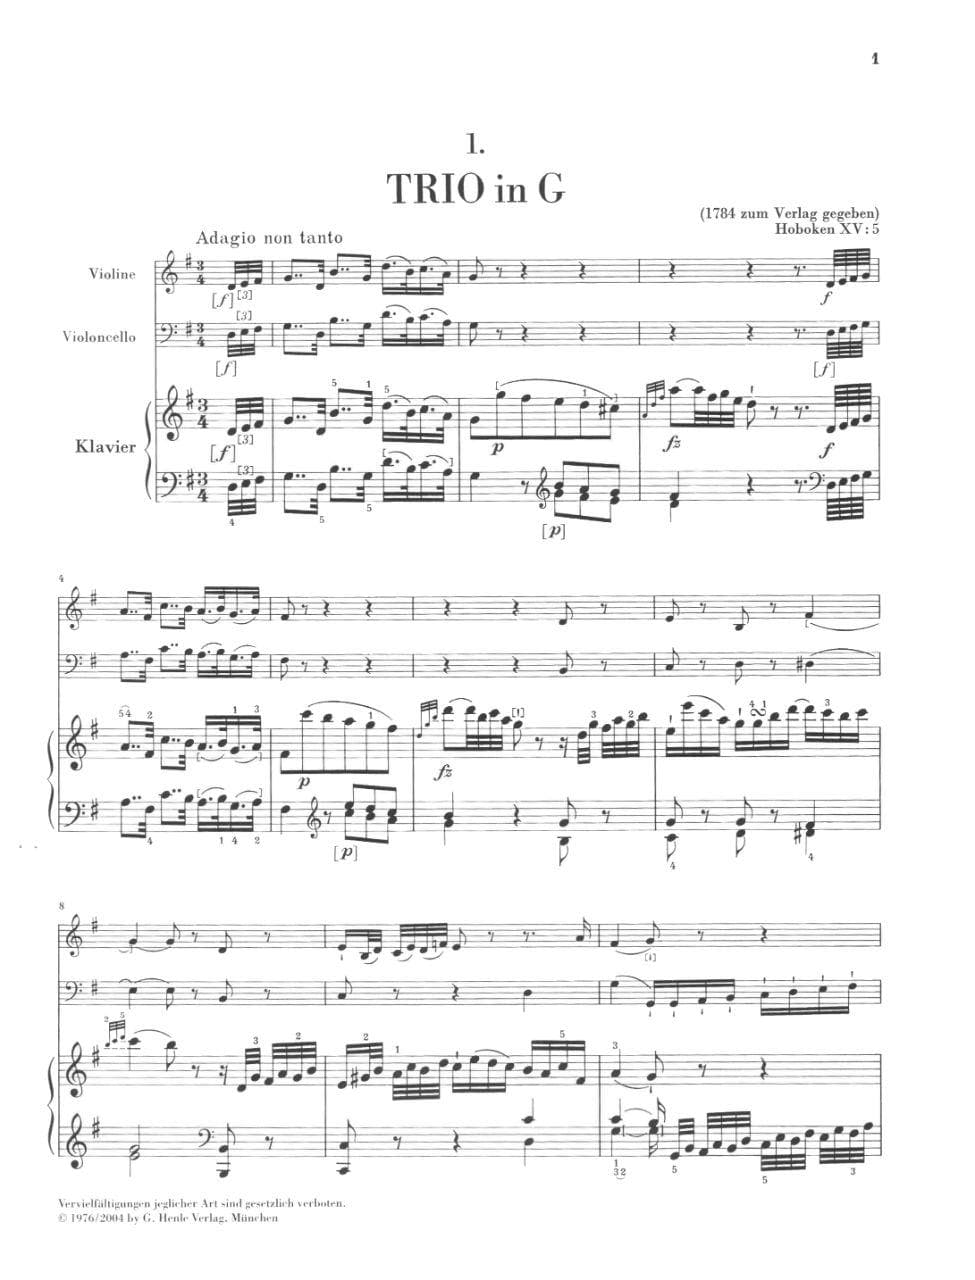 Haydn, Franz Joseph - Piano Trios, Volume 2 - Violin, Cello, and Piano - edited by Wolfgang Stockmeier - G Henle Verlag URTEXT